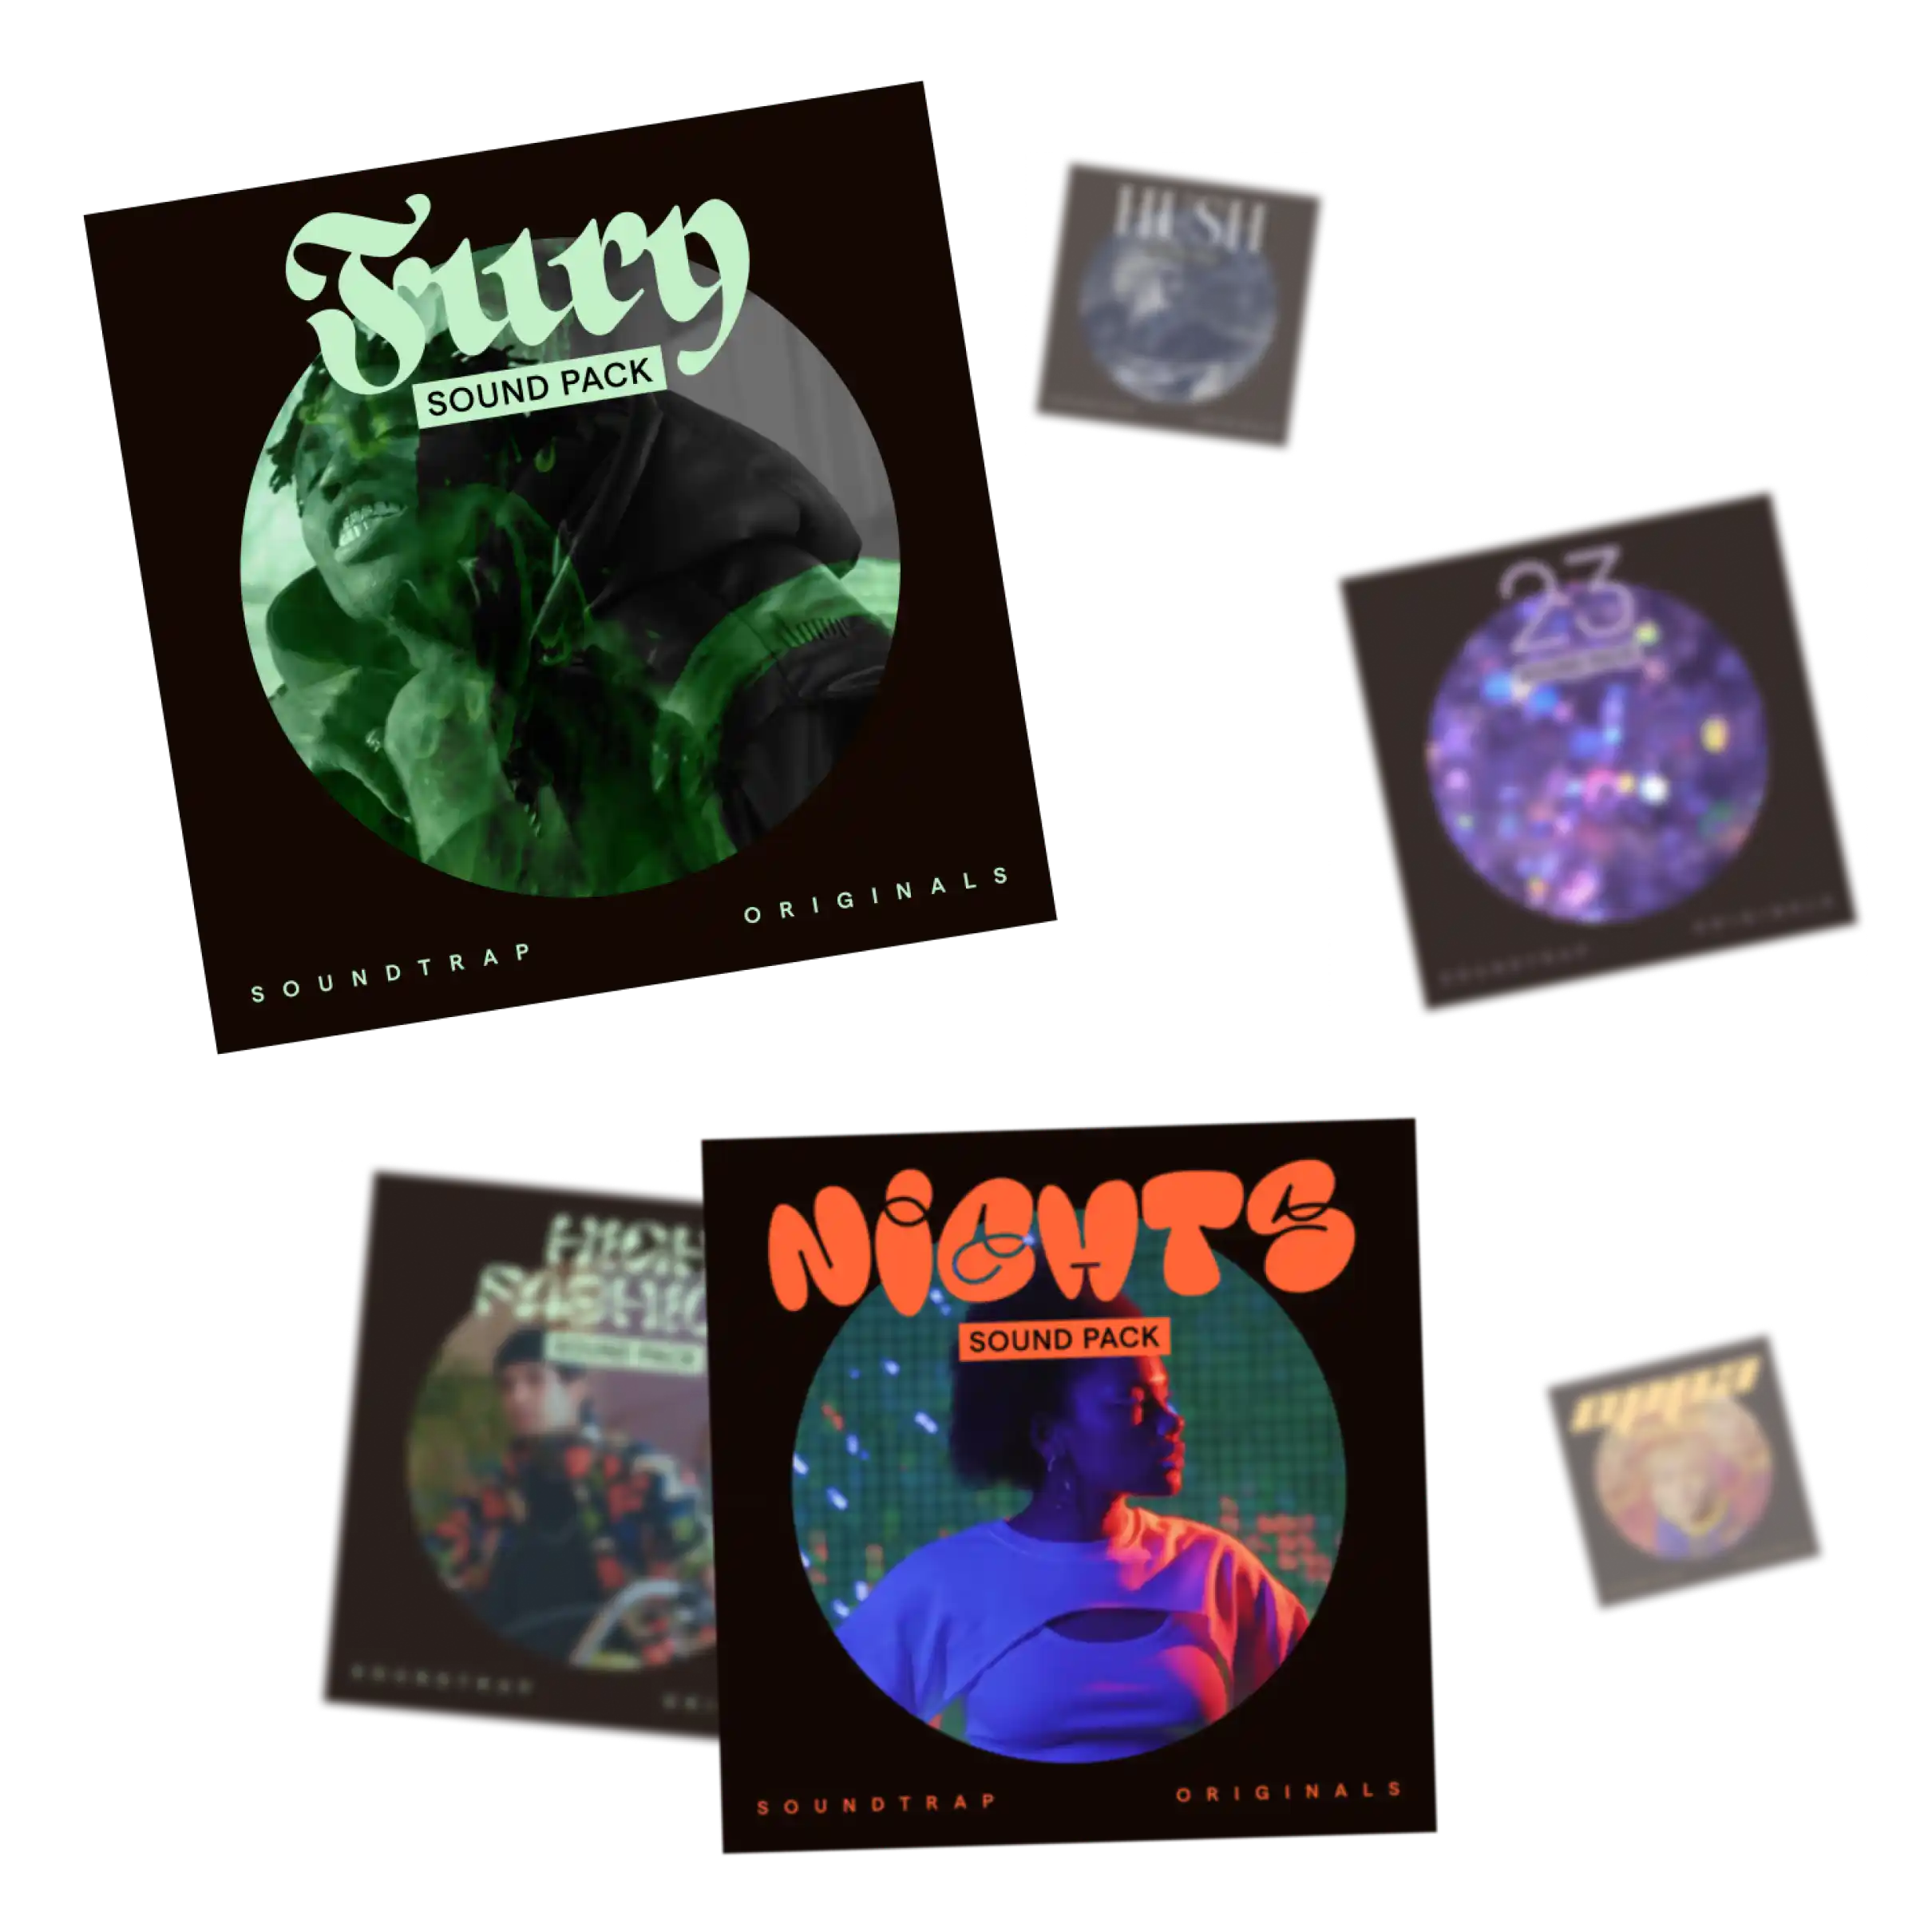 Various Soundtrap Originals sound pack artwork.